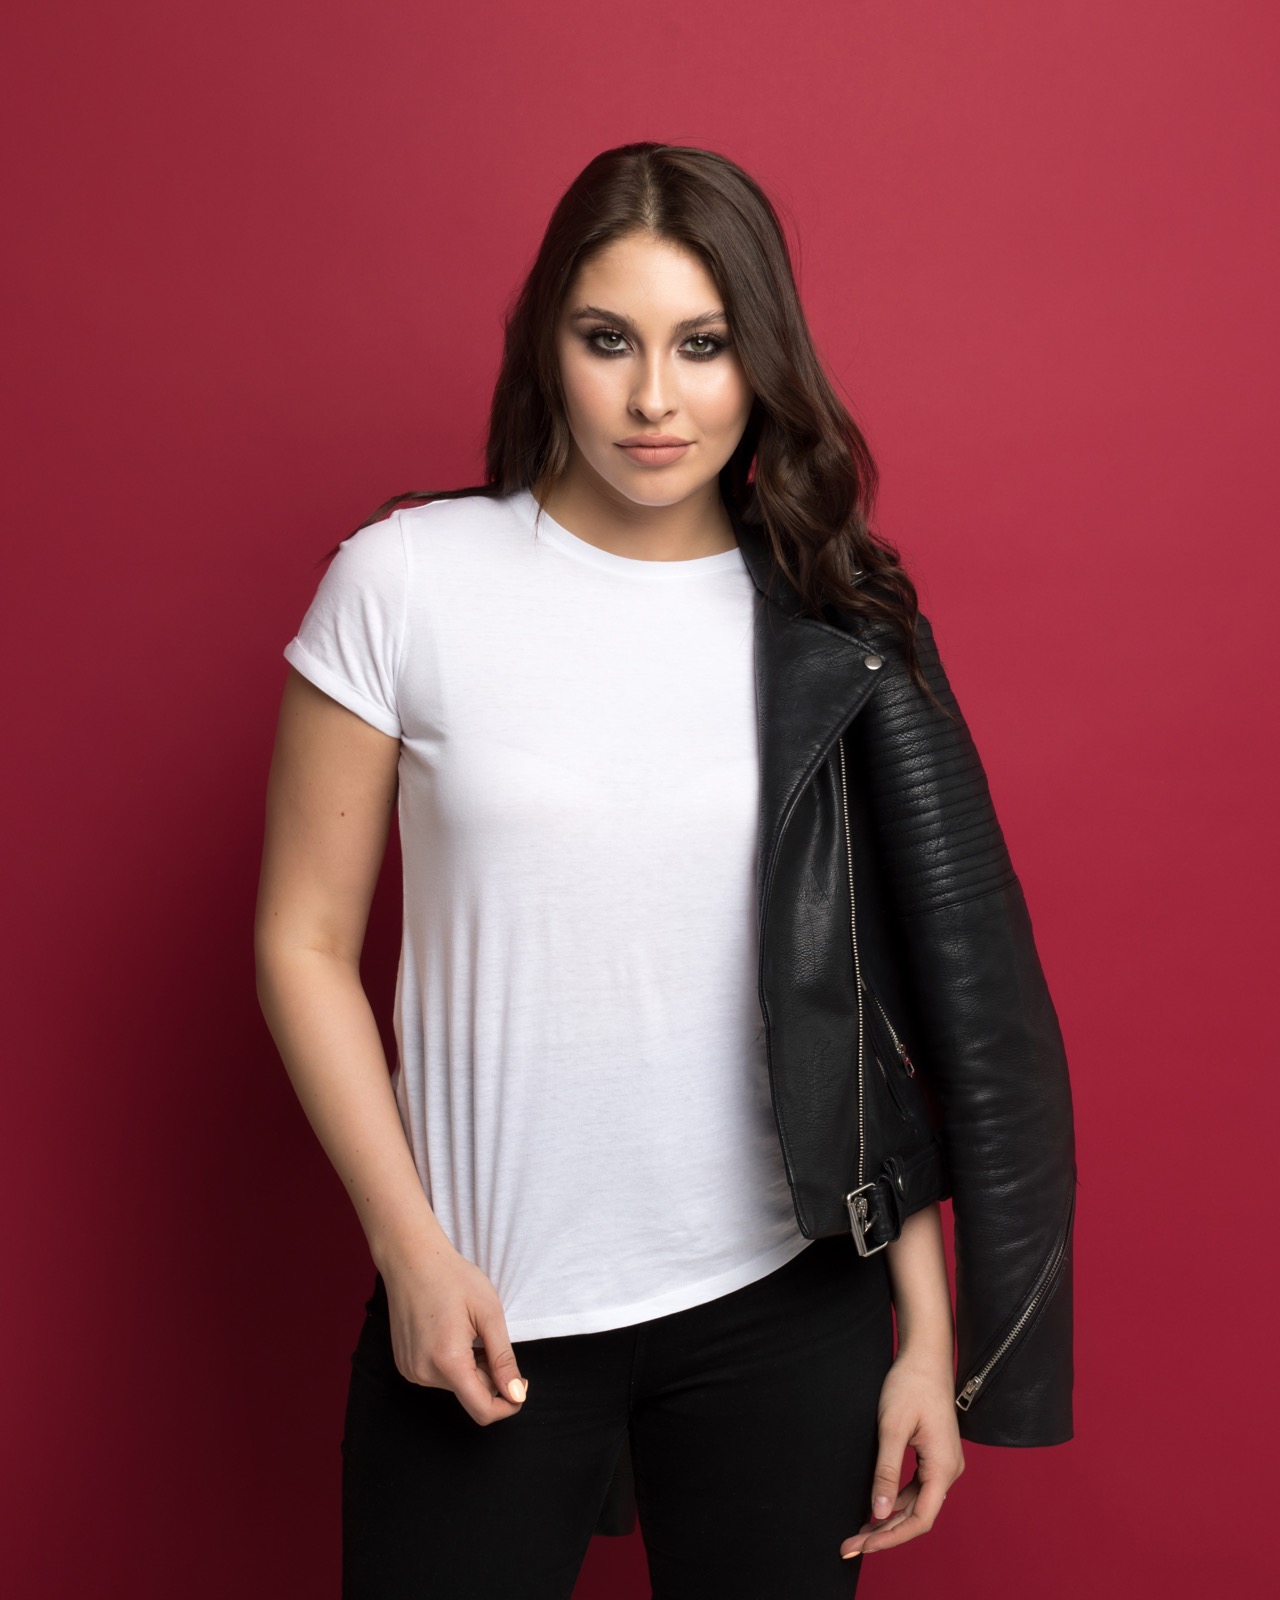 Women's White Fur Jacket, Black Crew-neck T-shirt, Black Leather